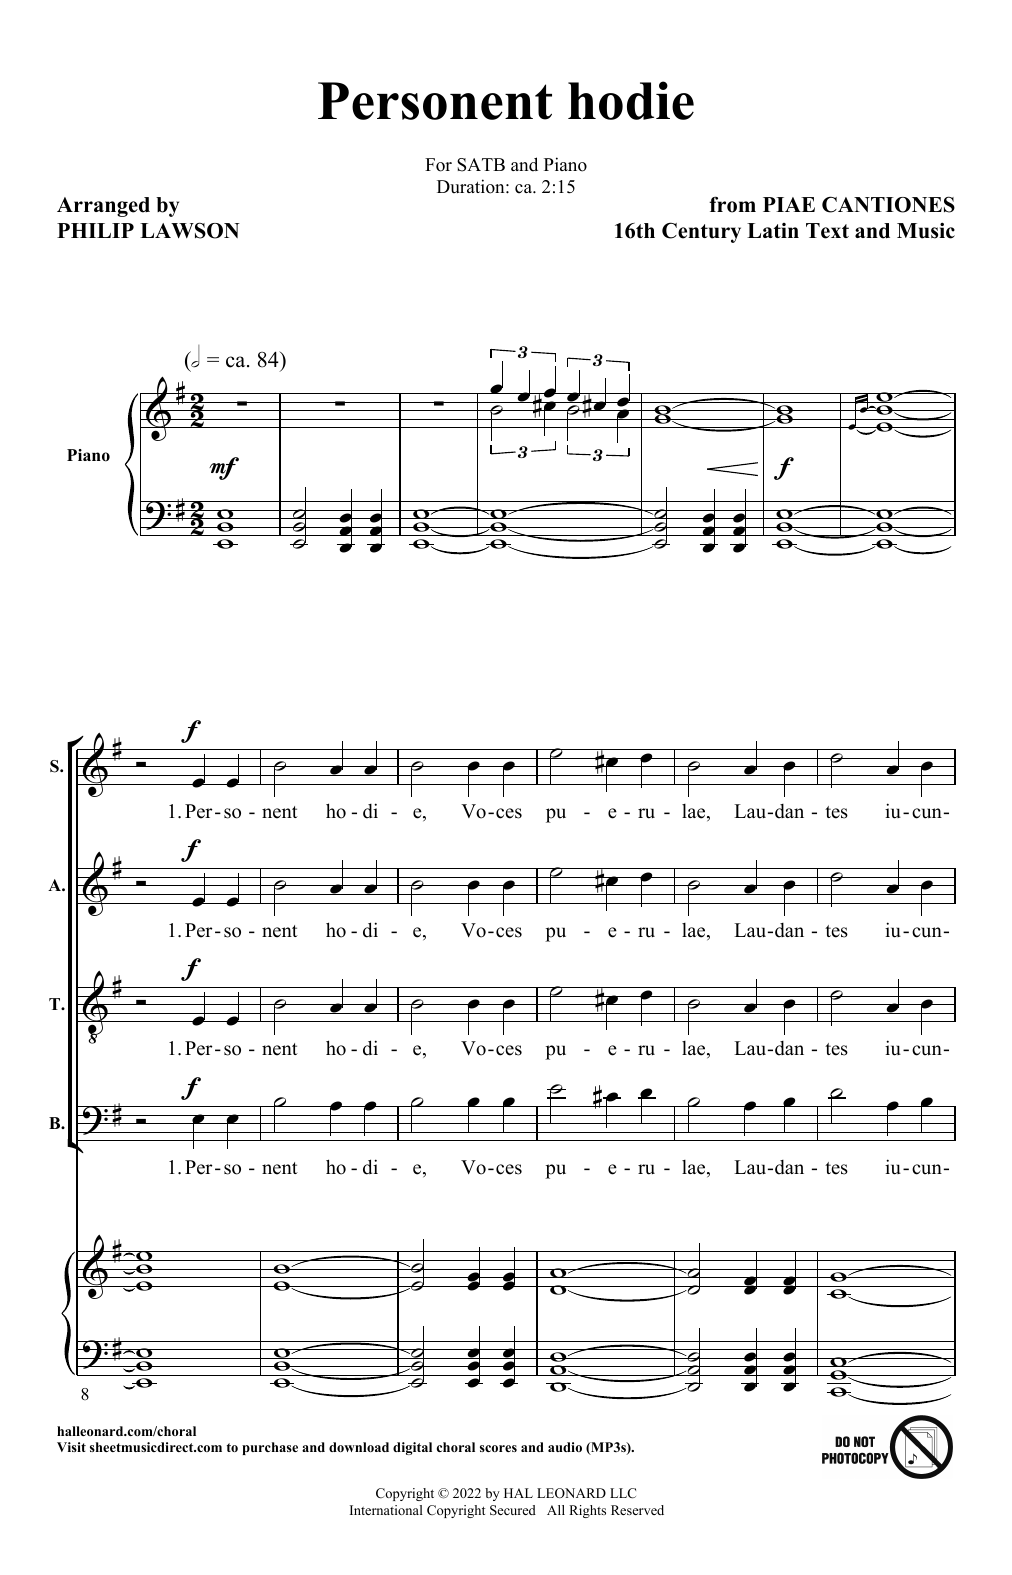 Philip Lawson Three Latin Carols (Collection) Sheet Music Notes & Chords for SATB Choir - Download or Print PDF